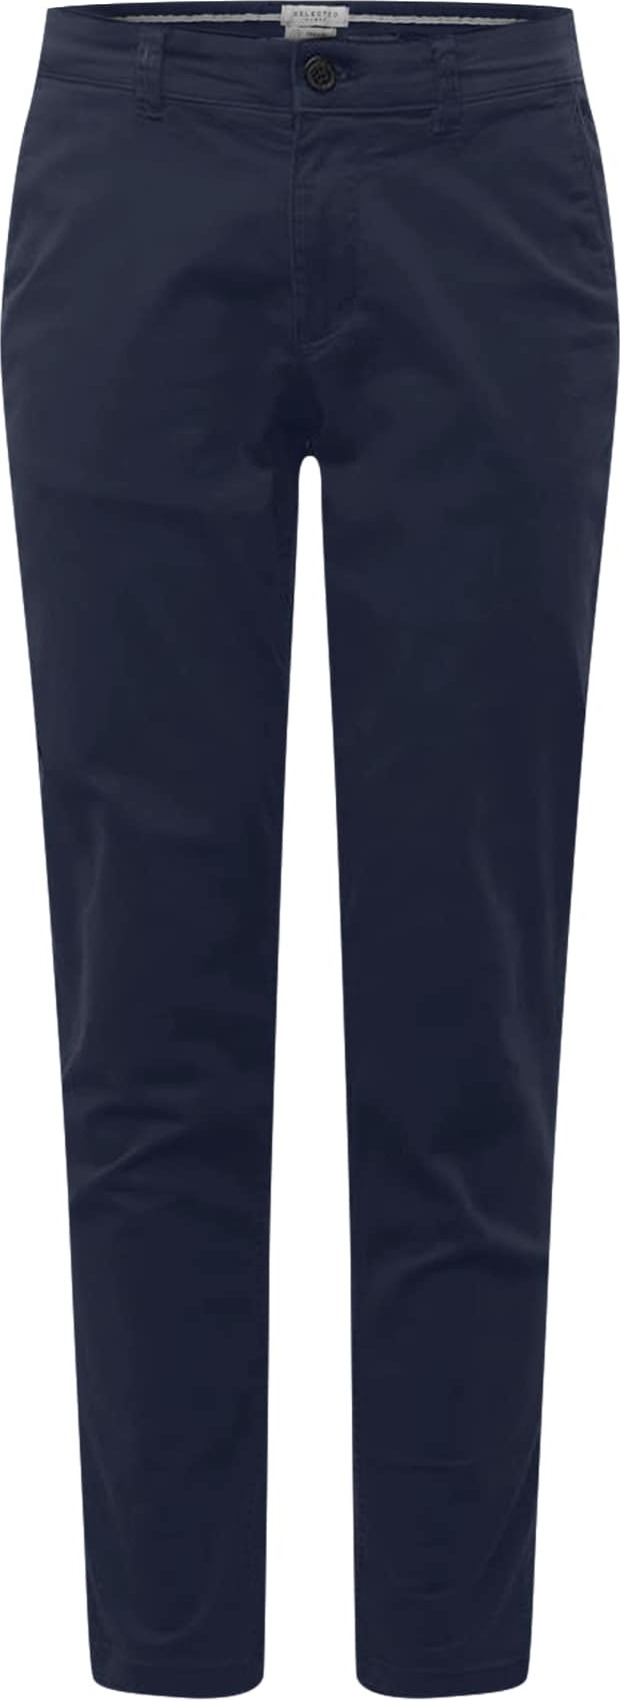 SELECTED HOMME Chino kalhoty 'NEW PARIS' tmavě modrá